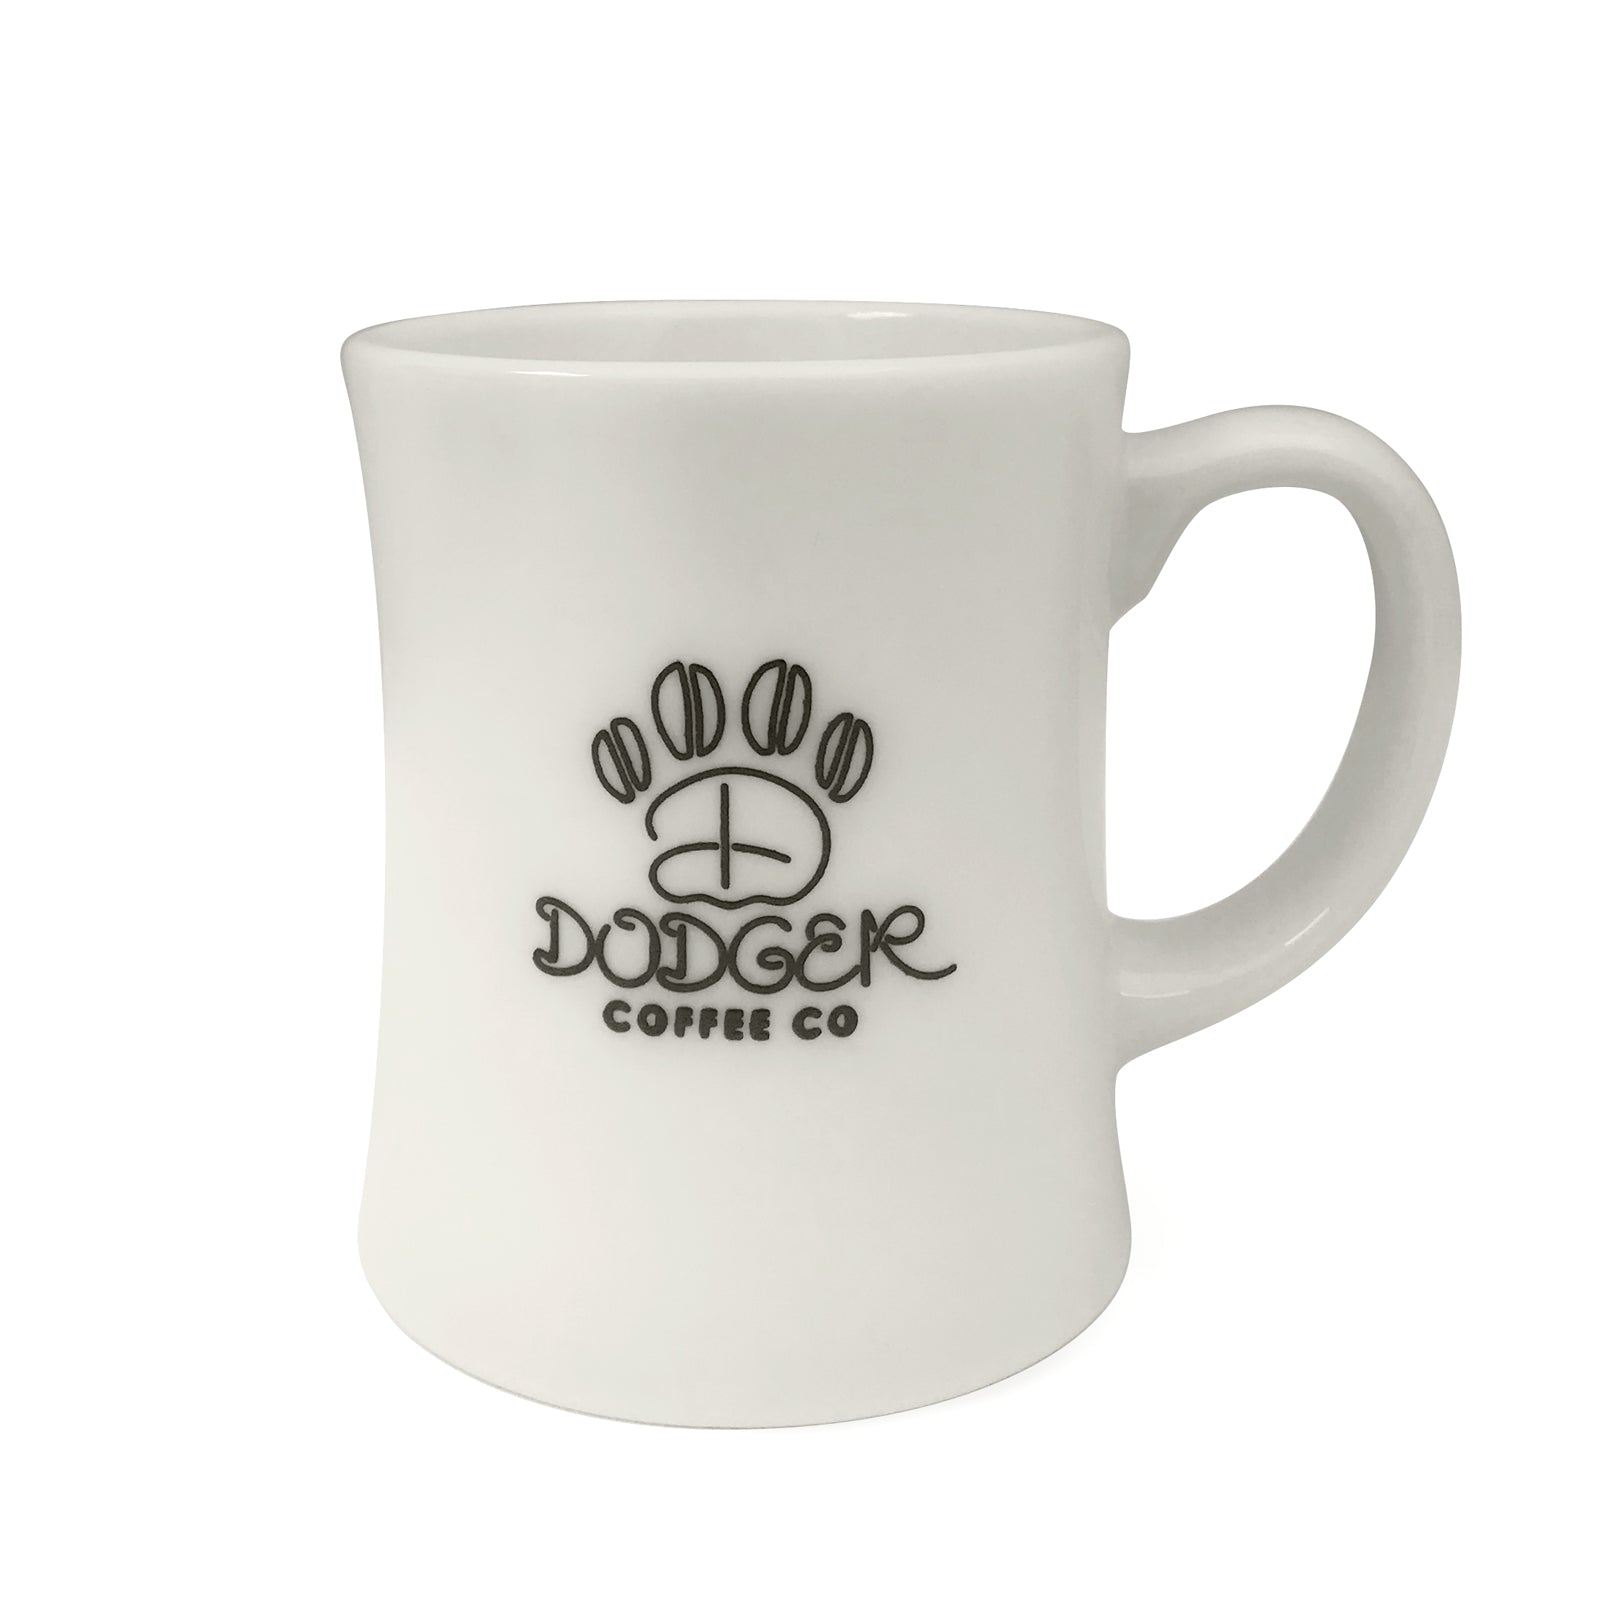 Dodger Coffee Mug – Dodger Coffee Co